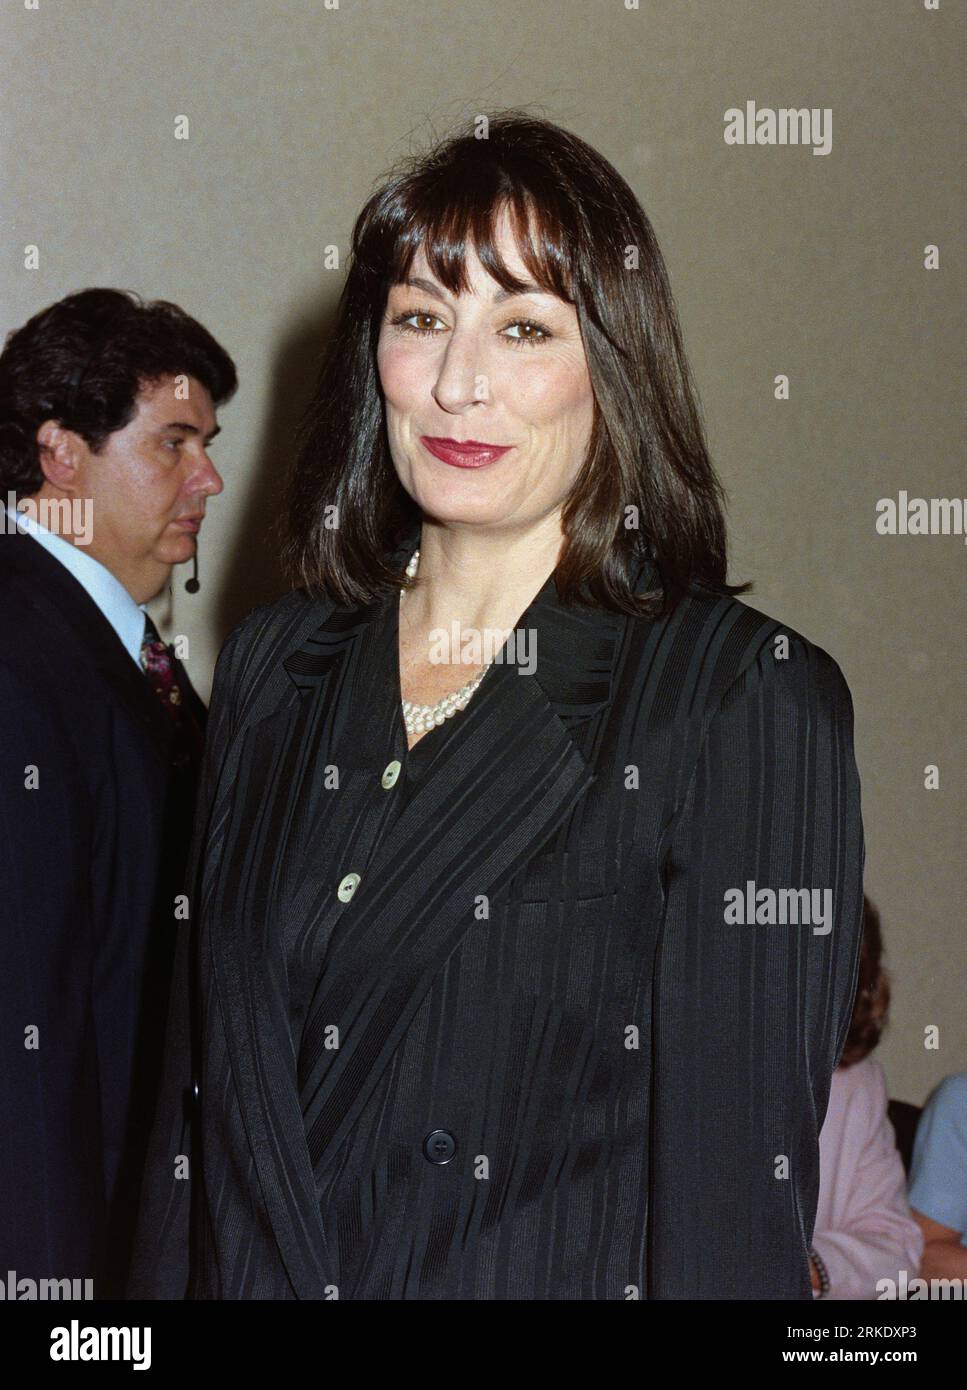 LOS ANGELES, CA. 21. Juni 1996: Schauspielerin Anjelica Huston bei den Women in Film Crystal + Lucy Awards im Century Plaza Hotel. Bild: Paul Smith / Featureflash Stockfoto